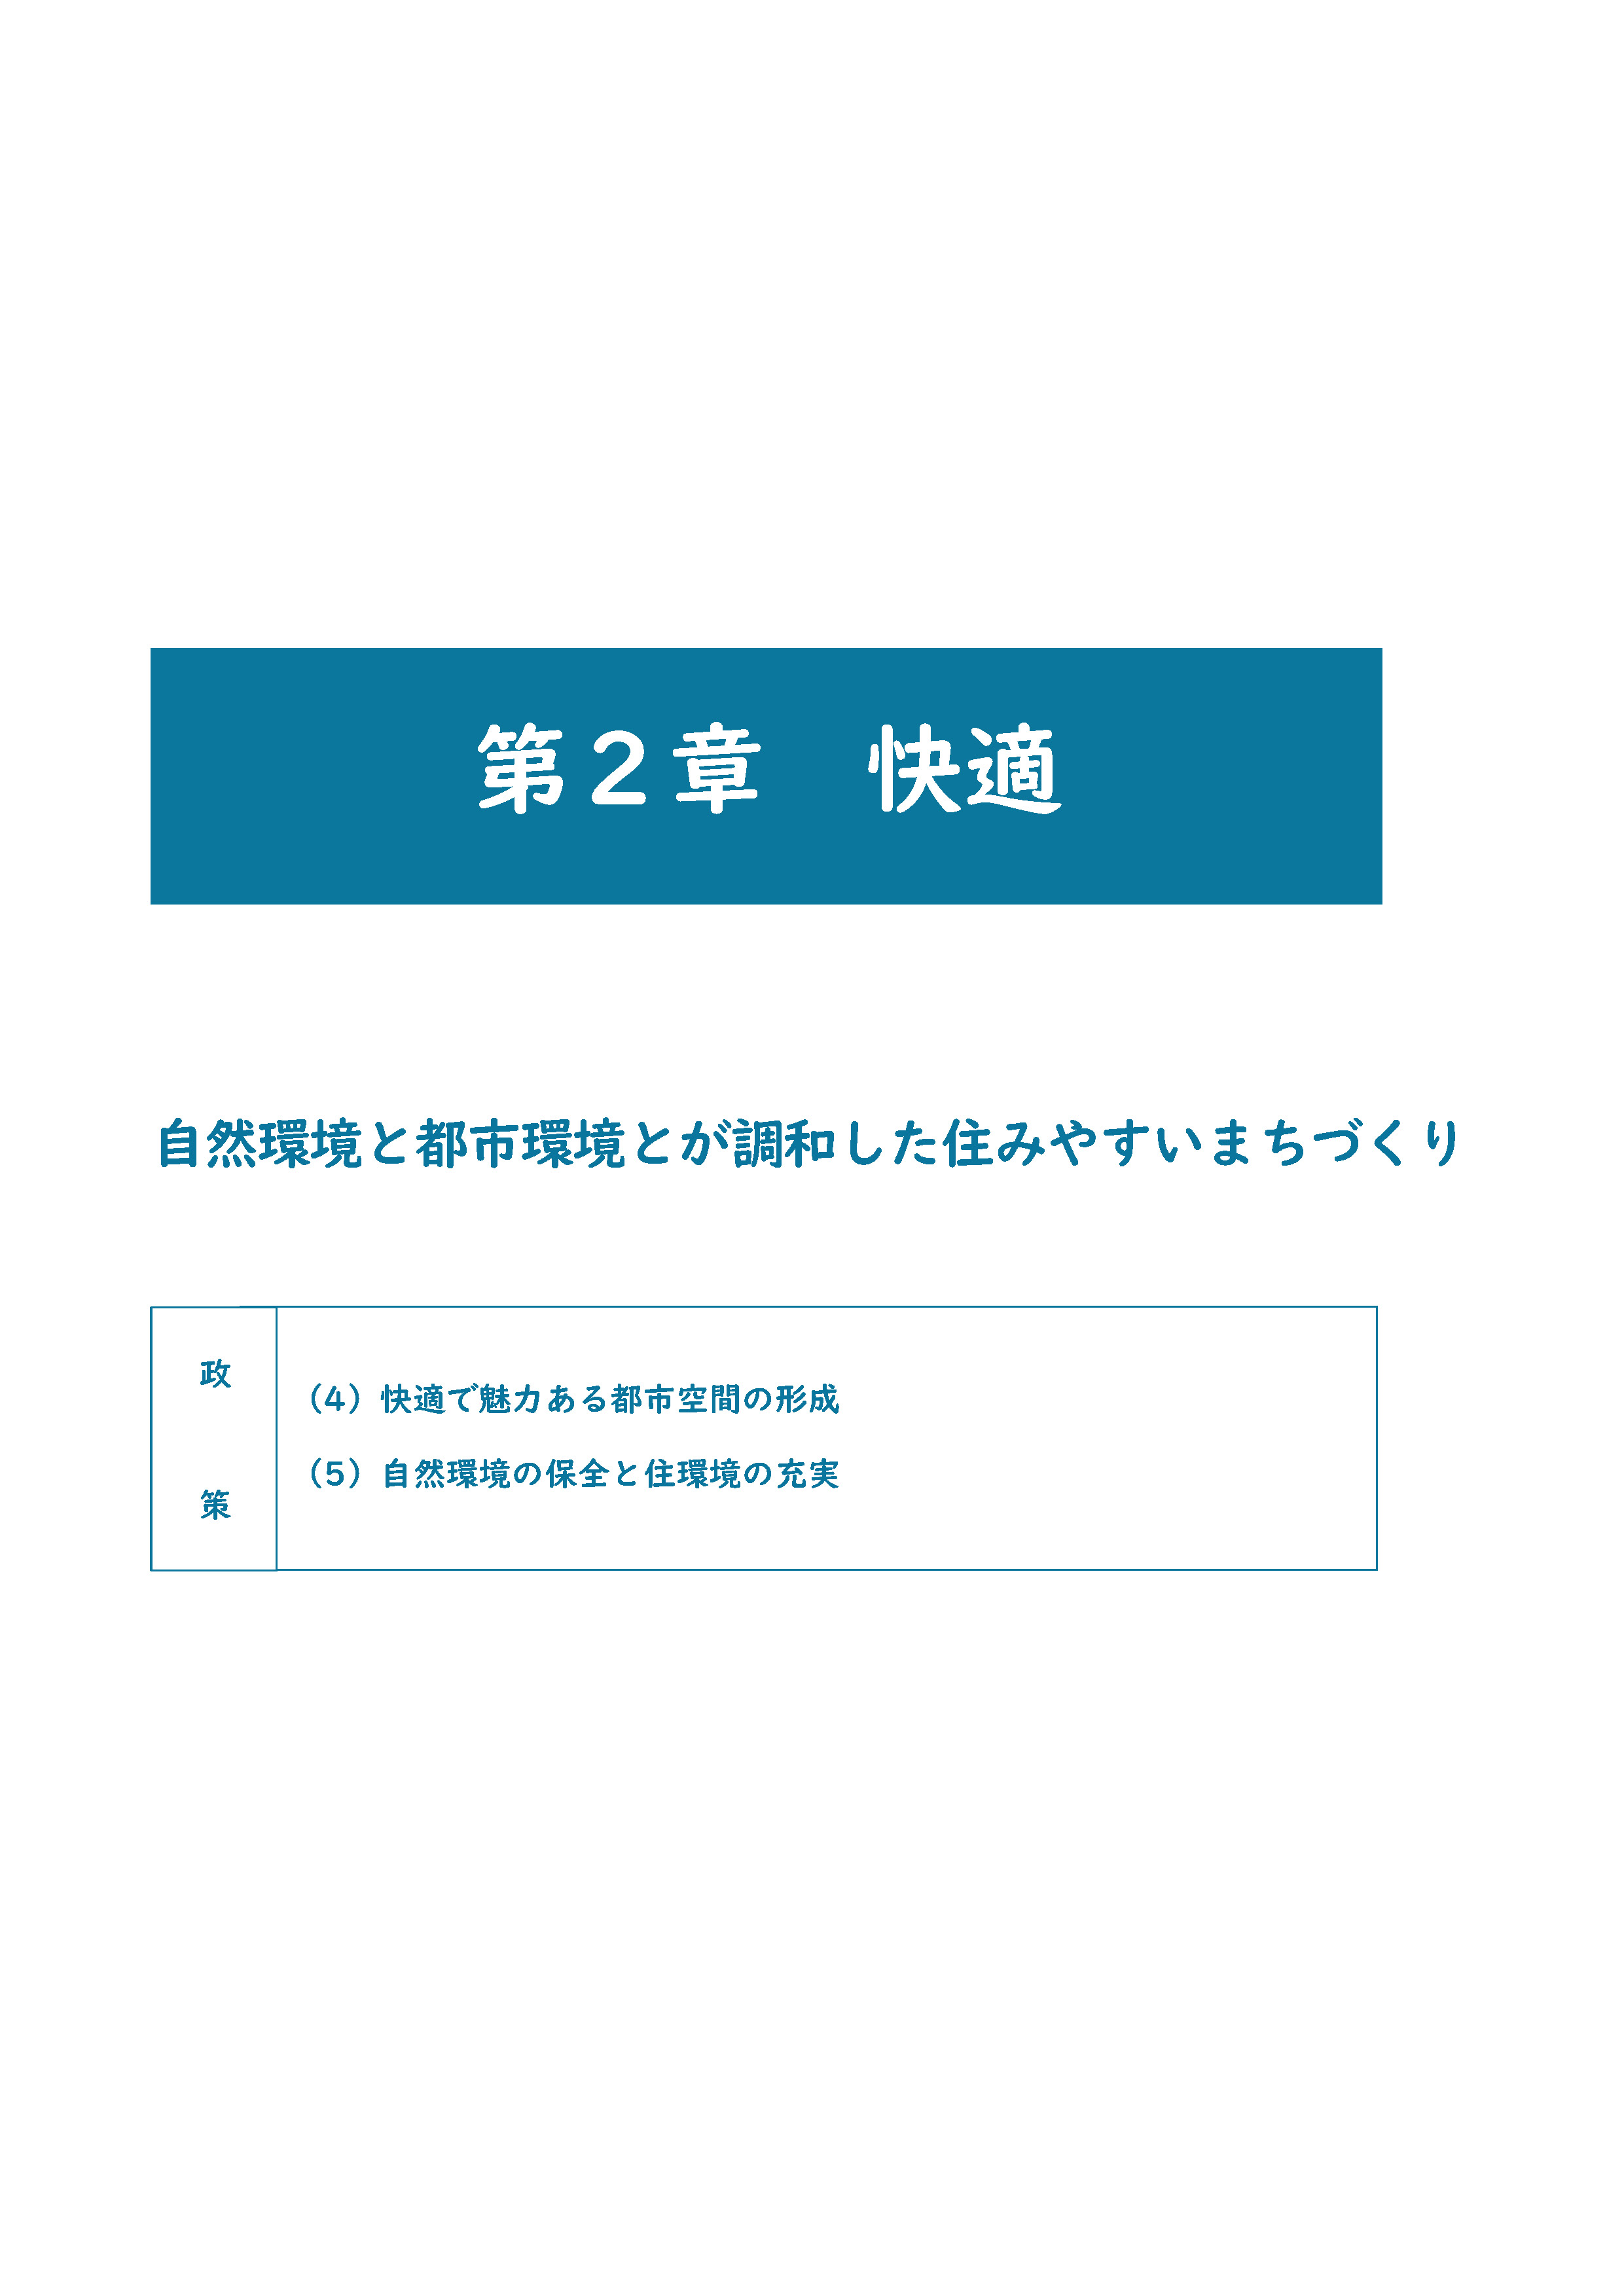 akou_kaitei_JPG024.jpg